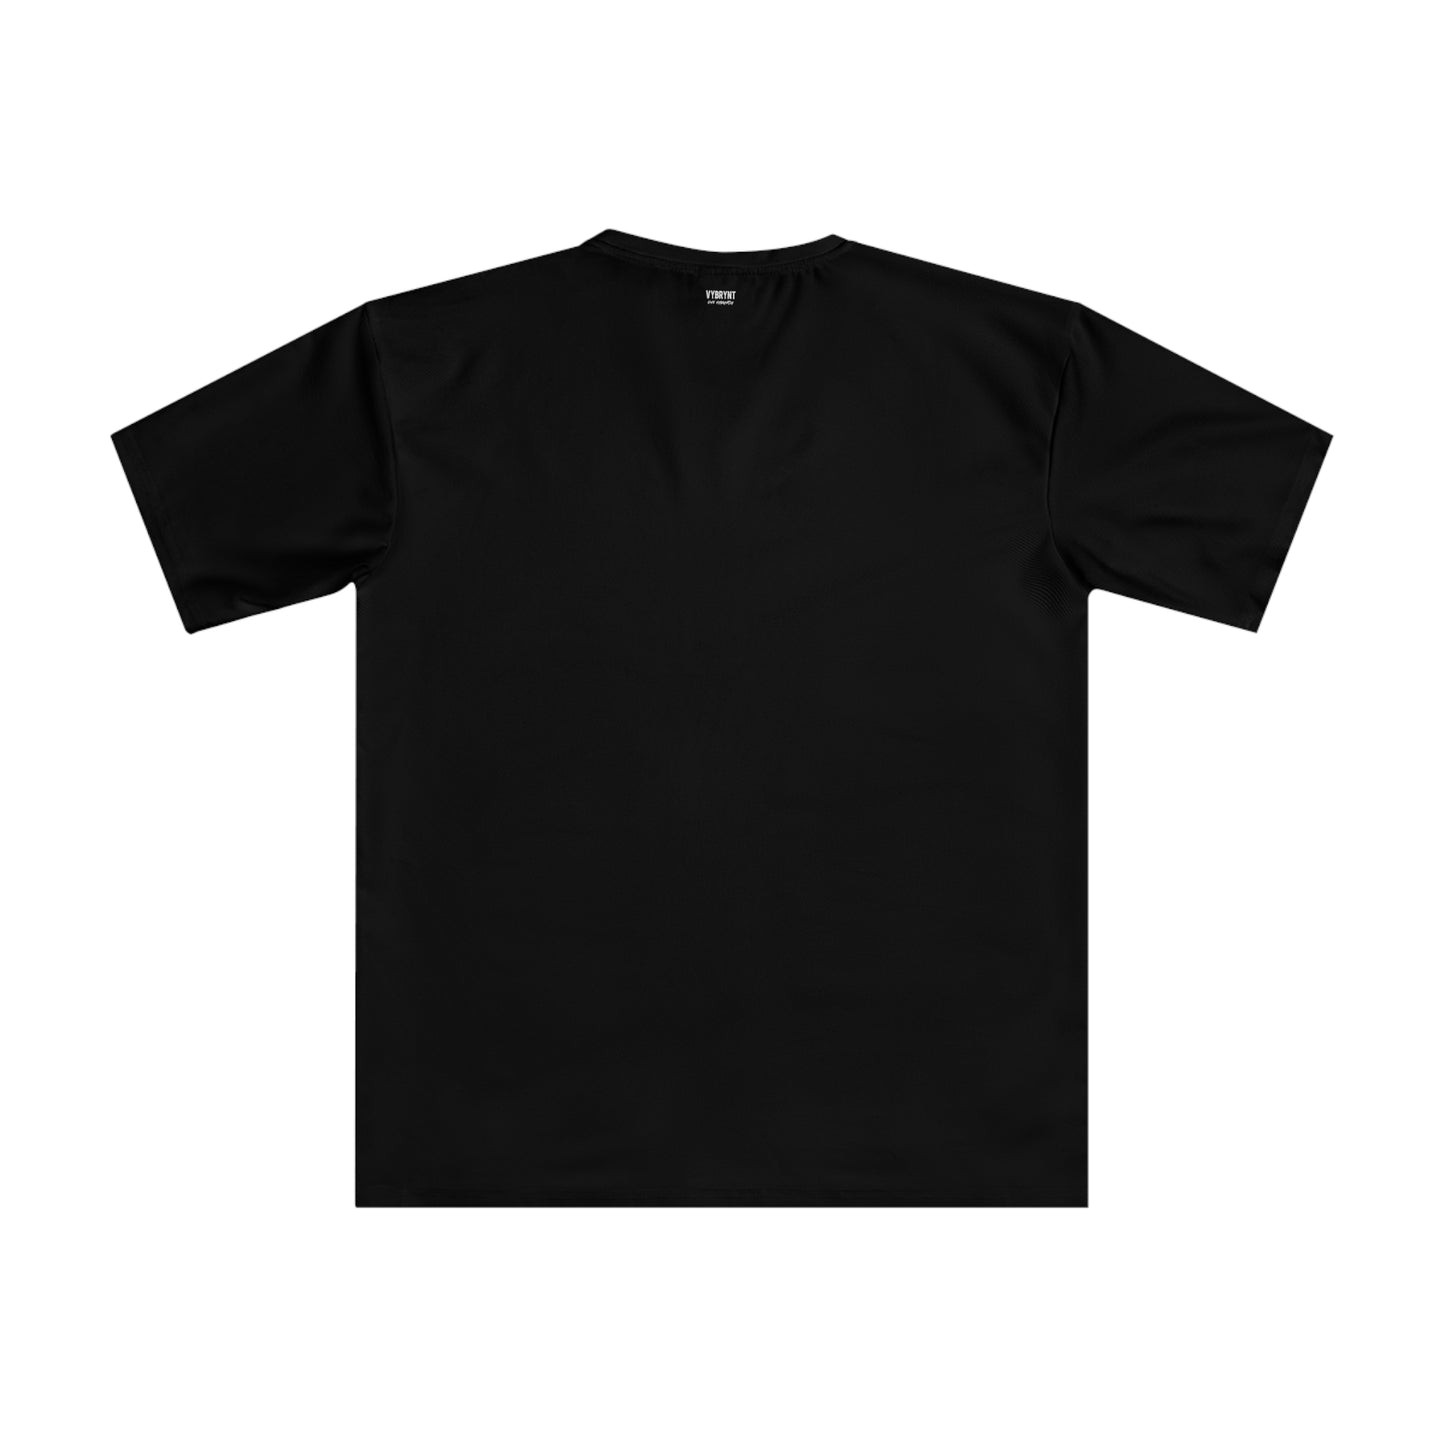 125th Street Men's Black T-shirt